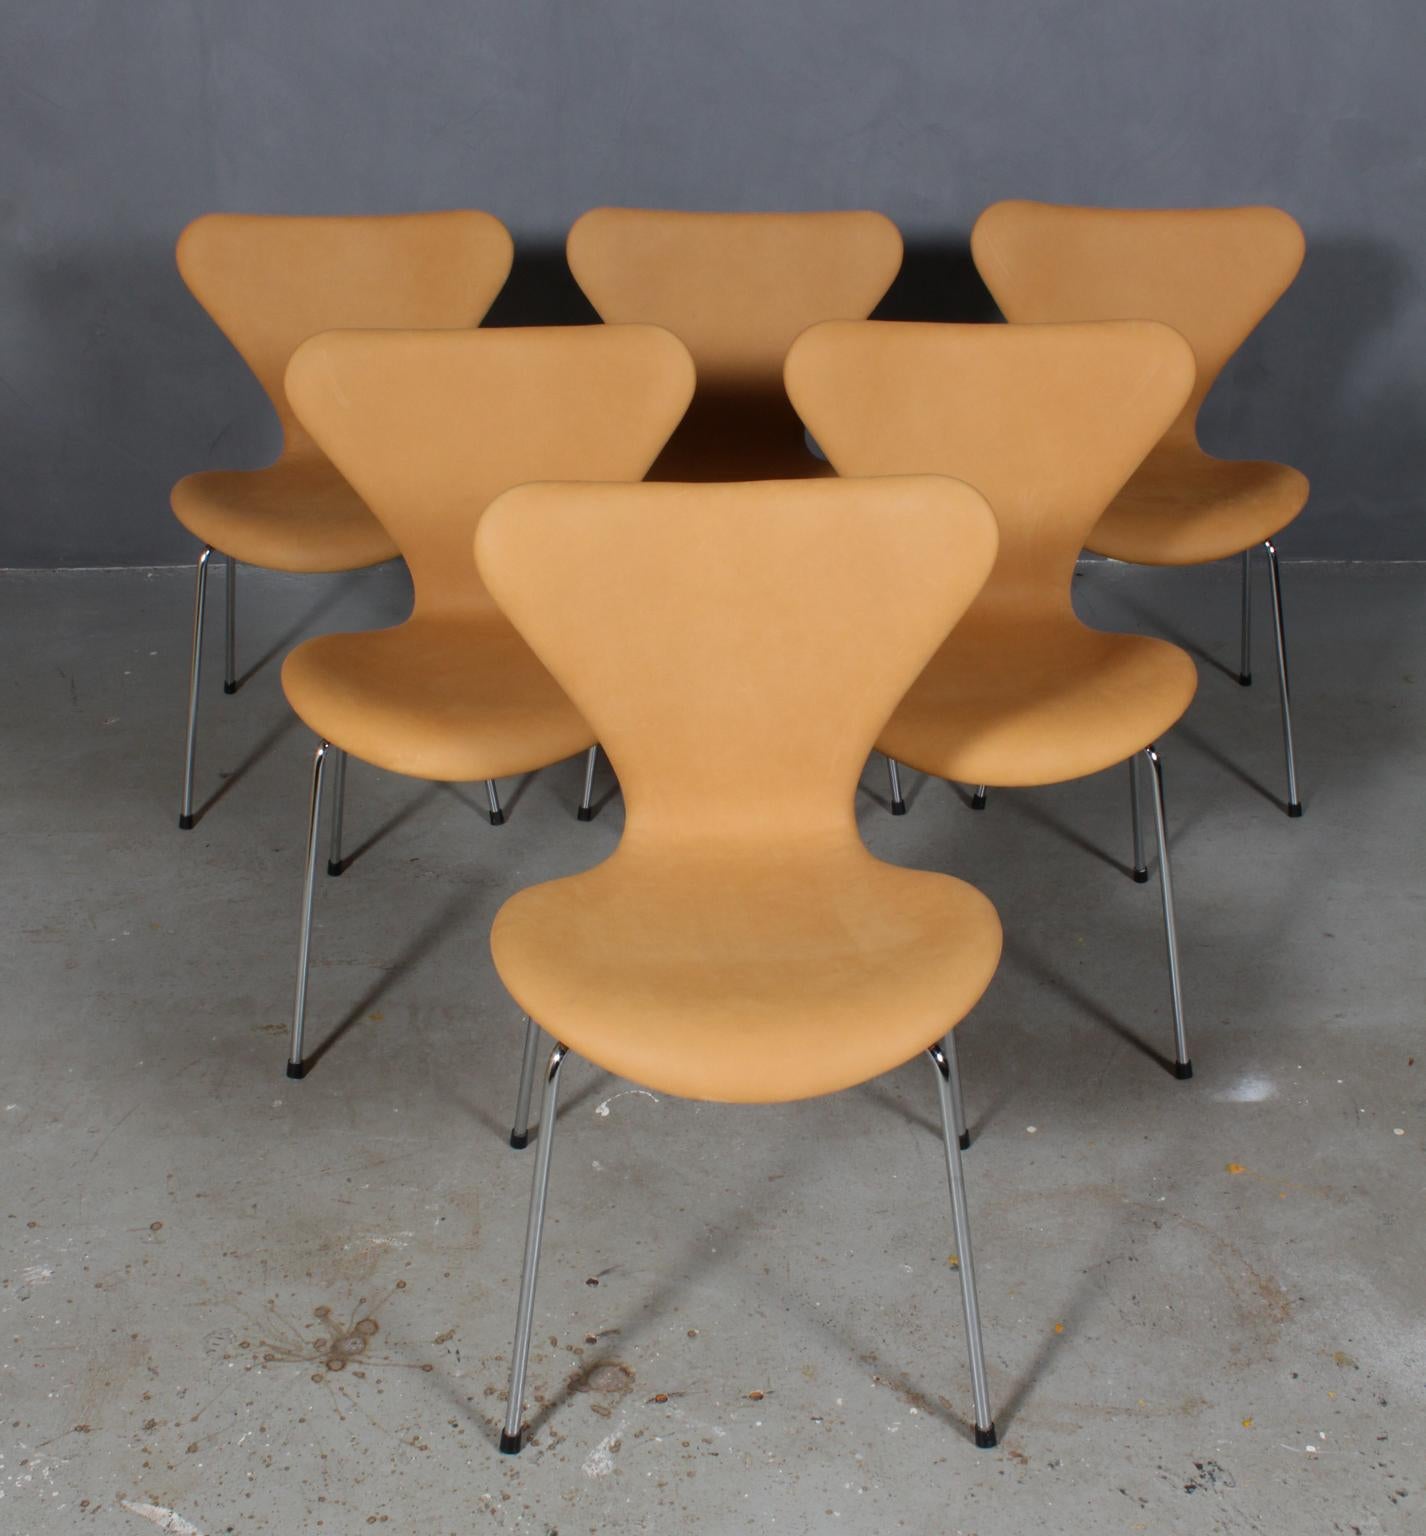 Arne Jacobsen dining chair new upholstered with nubuck aniline leather.

Base of chrome steel tube.

Model 3107 Syveren, made by Fritz Hansen.